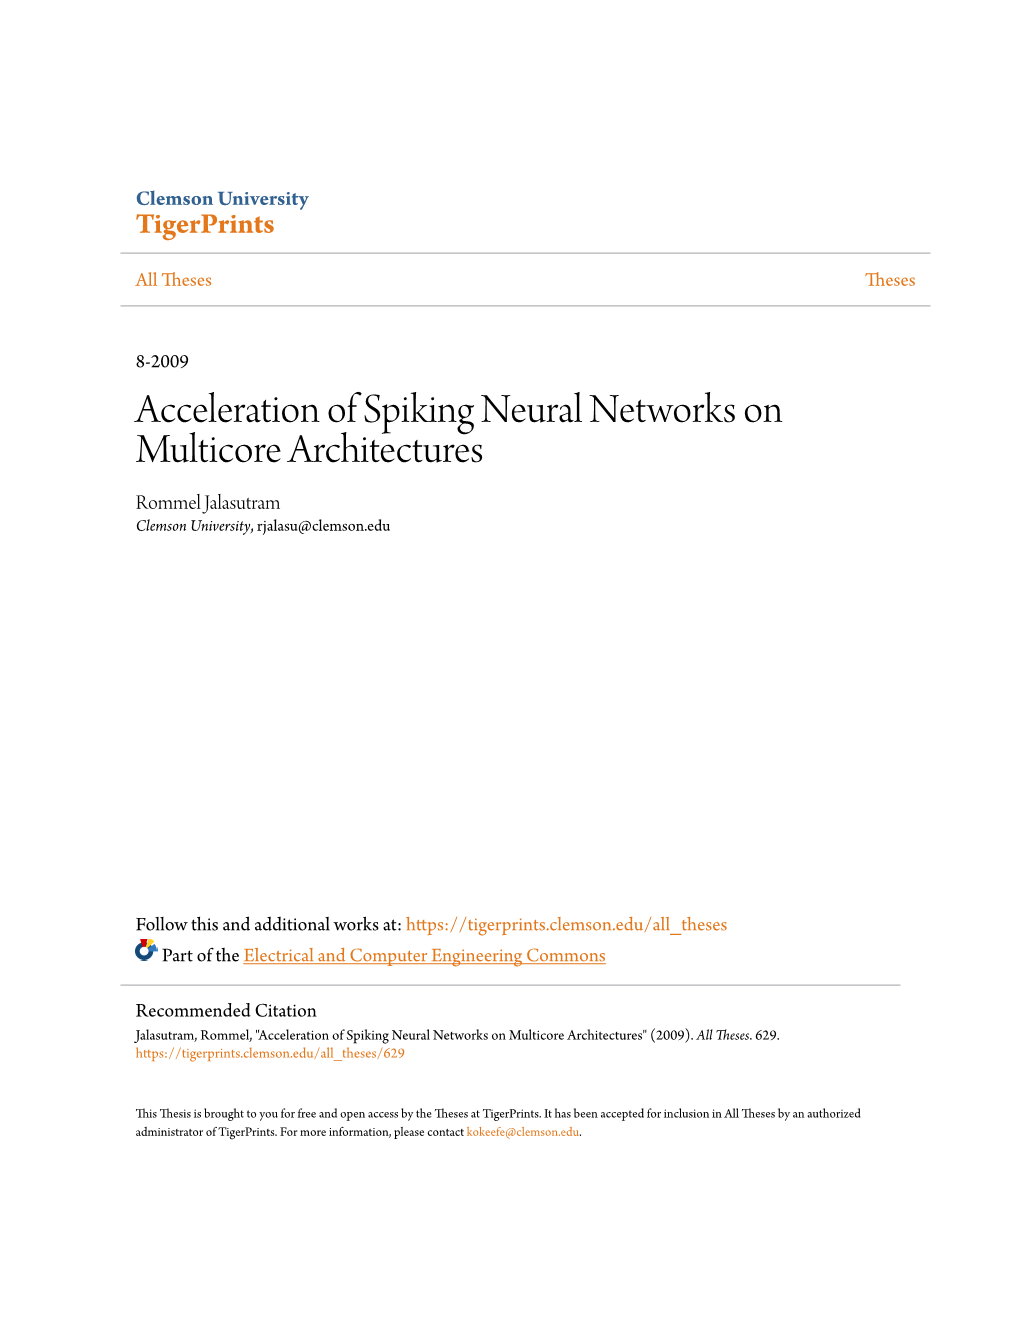 Acceleration of Spiking Neural Networks on Multicore Architectures Rommel Jalasutram Clemson University, Rjalasu@Clemson.Edu